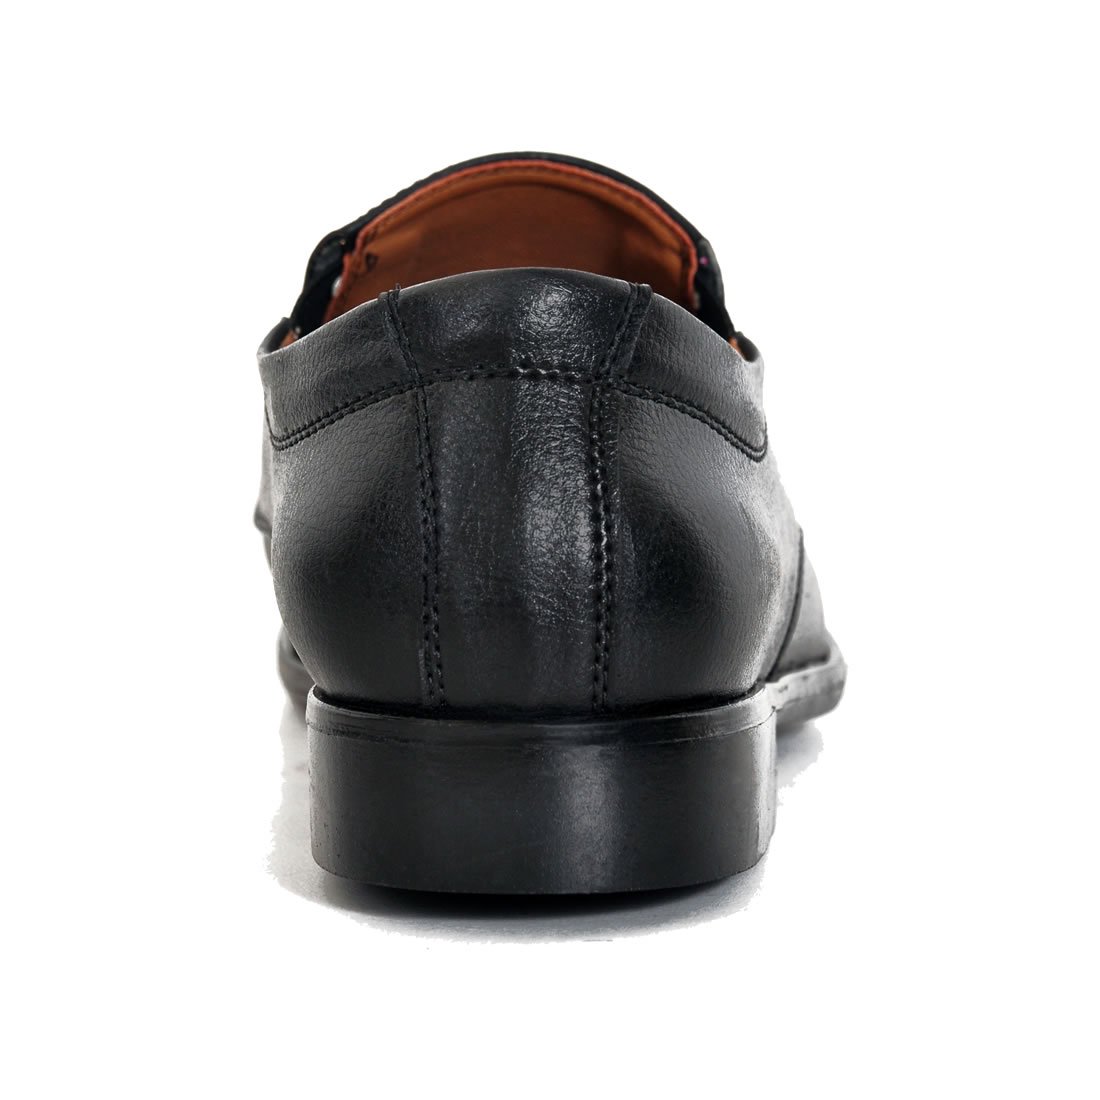 FT-Zapato-Chernandez-Formal-310-negro-con-vena-calzaunico (4)